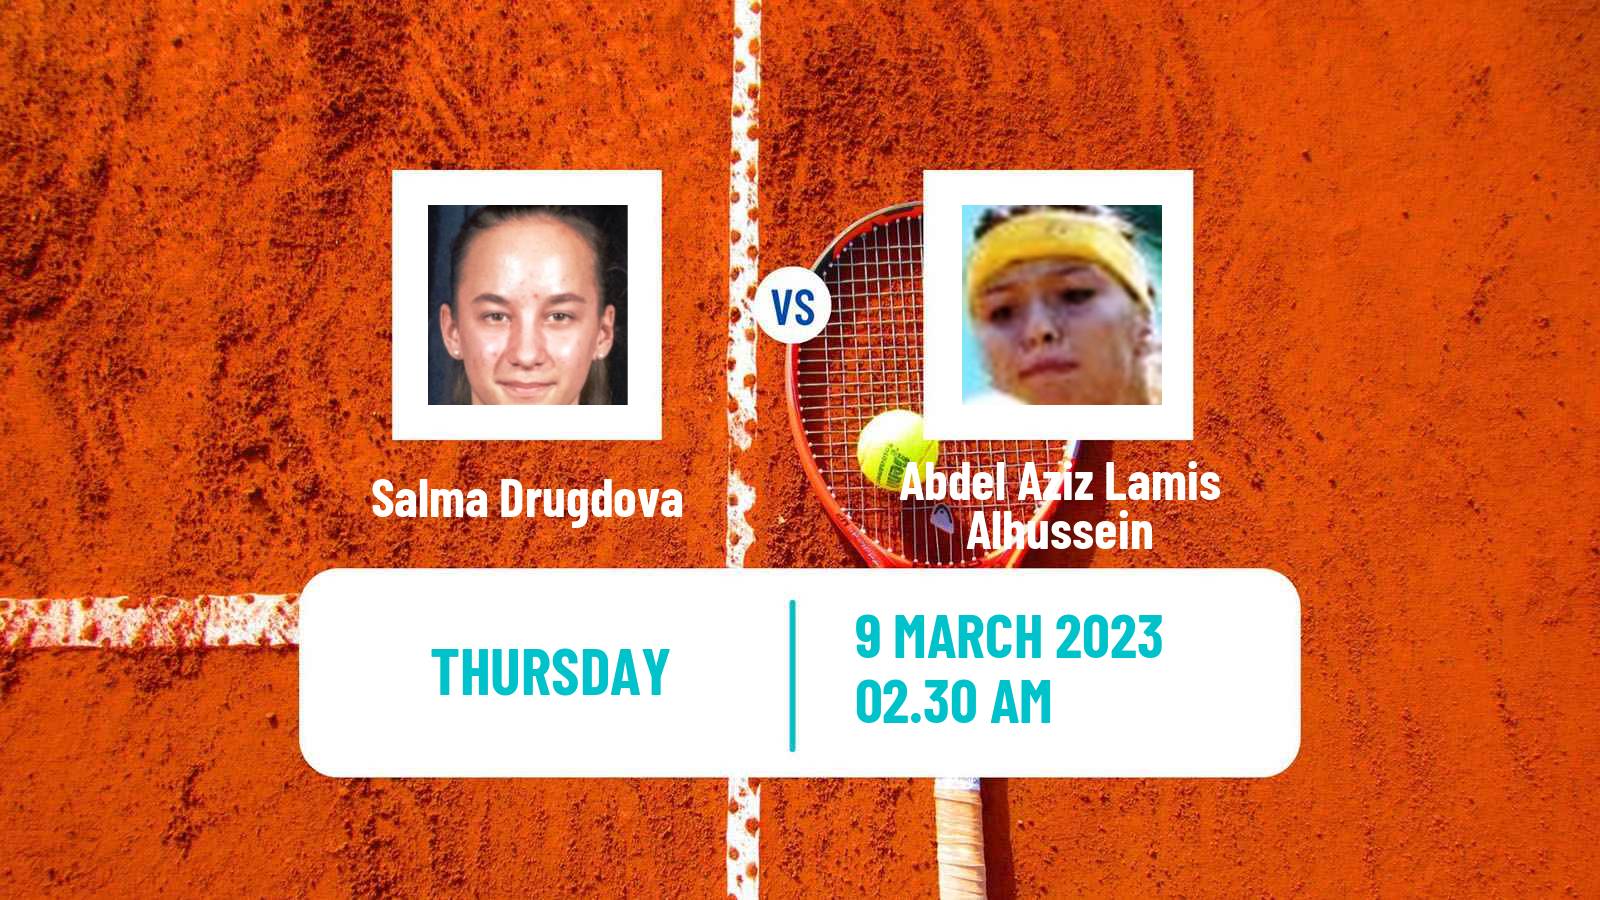 Tennis ITF Tournaments Salma Drugdova - Abdel Aziz Lamis Alhussein